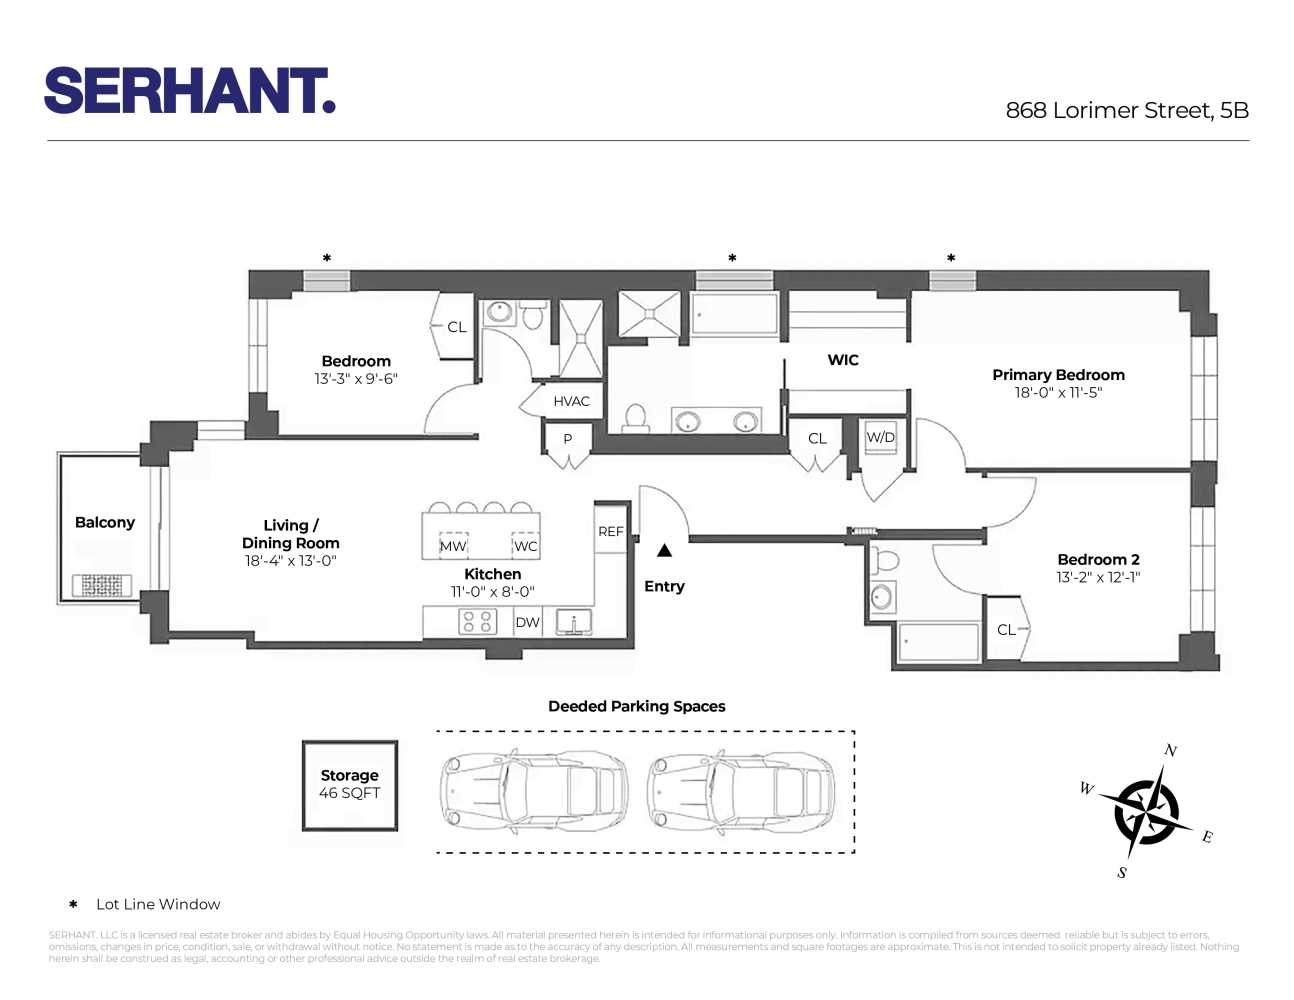 Floorplan for 868 Lorimer Street, 5B